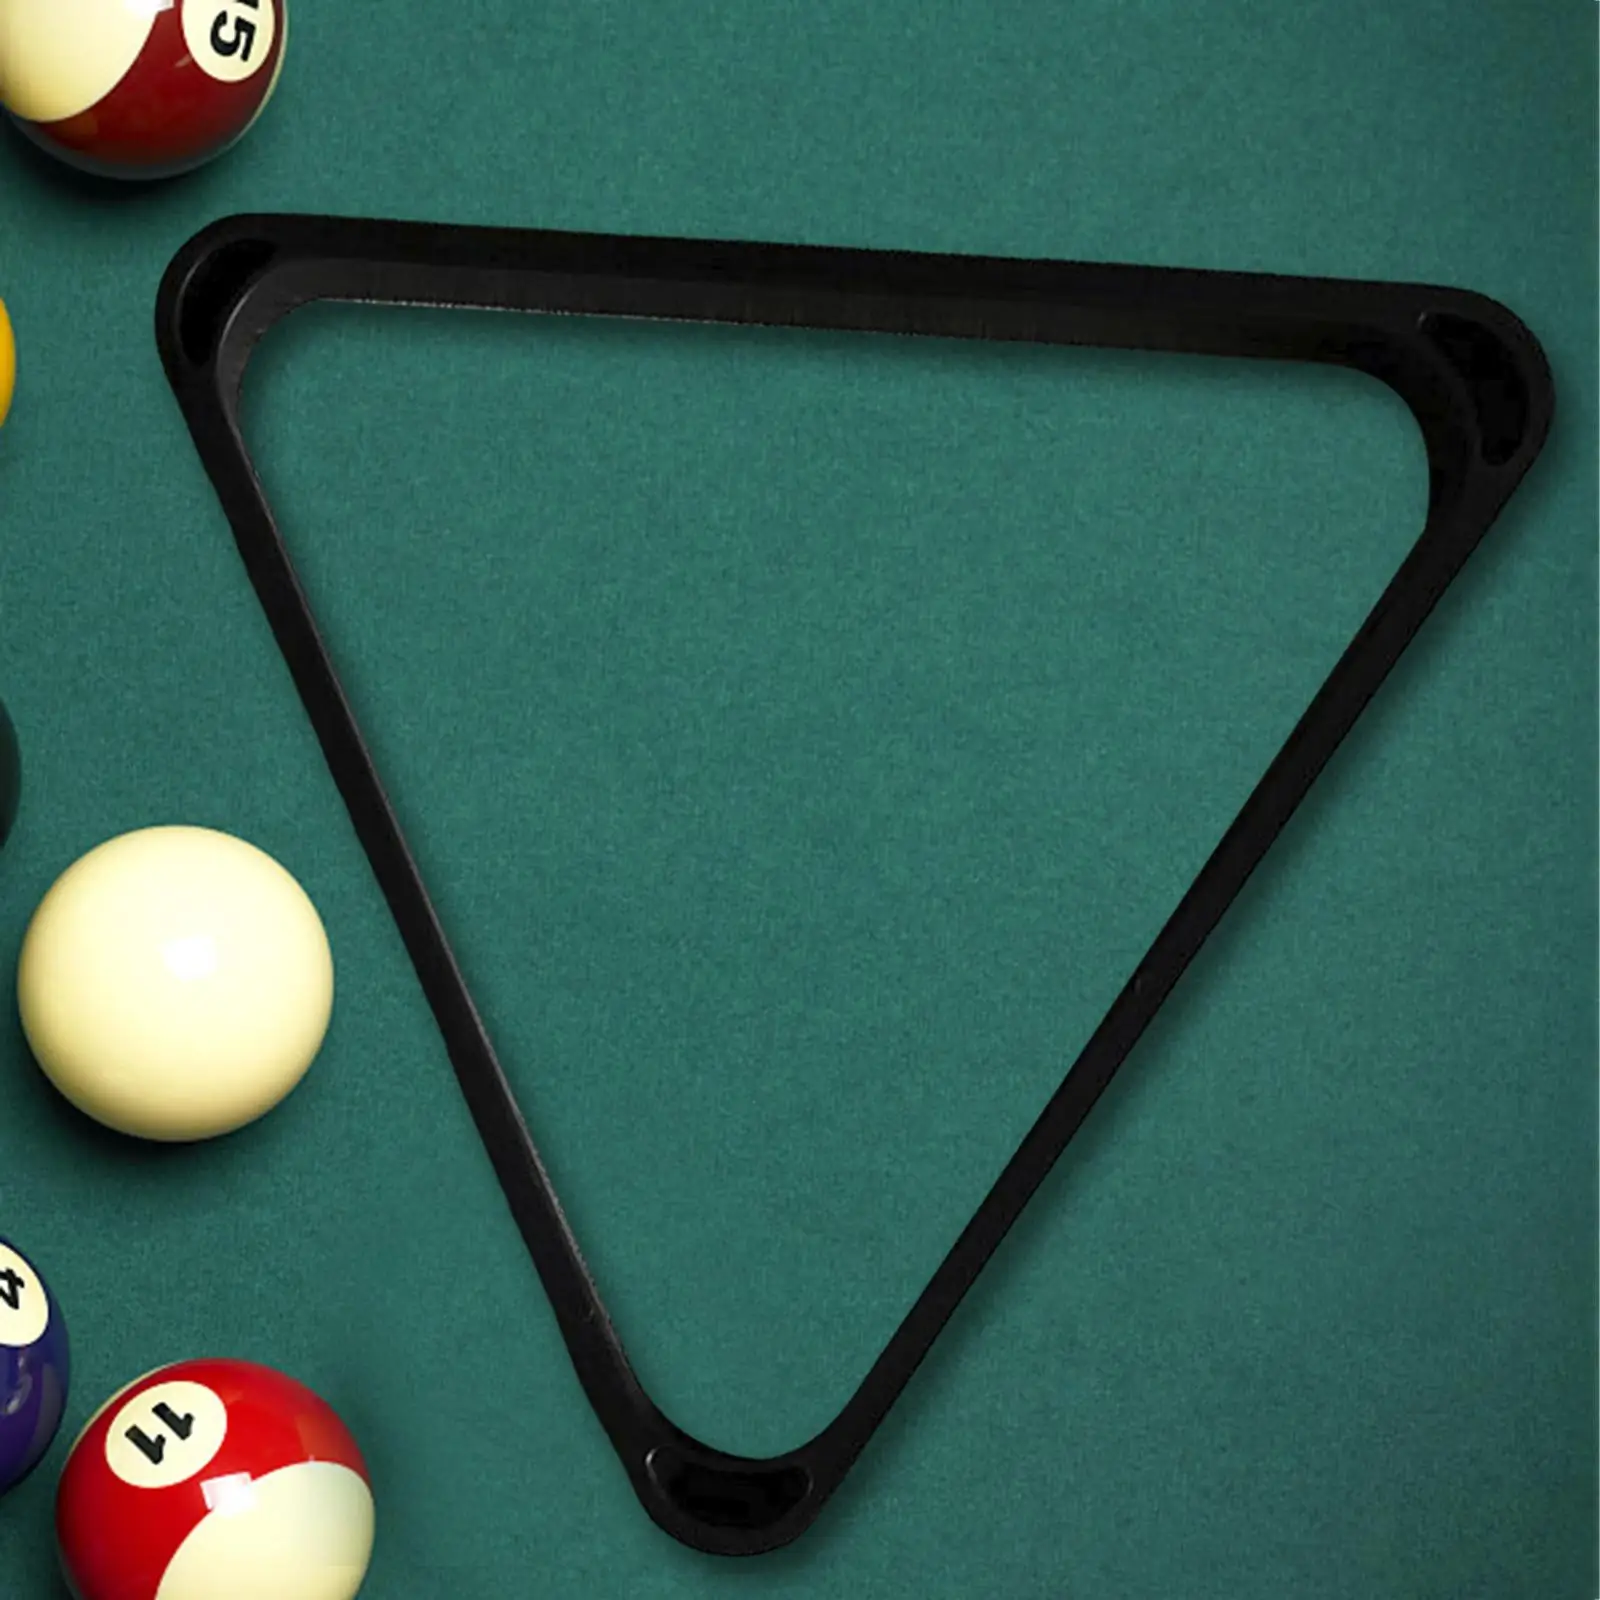 Billiard Triangle Ball Rack Portable Holder Table Pool Ball Racks for 2-1/4